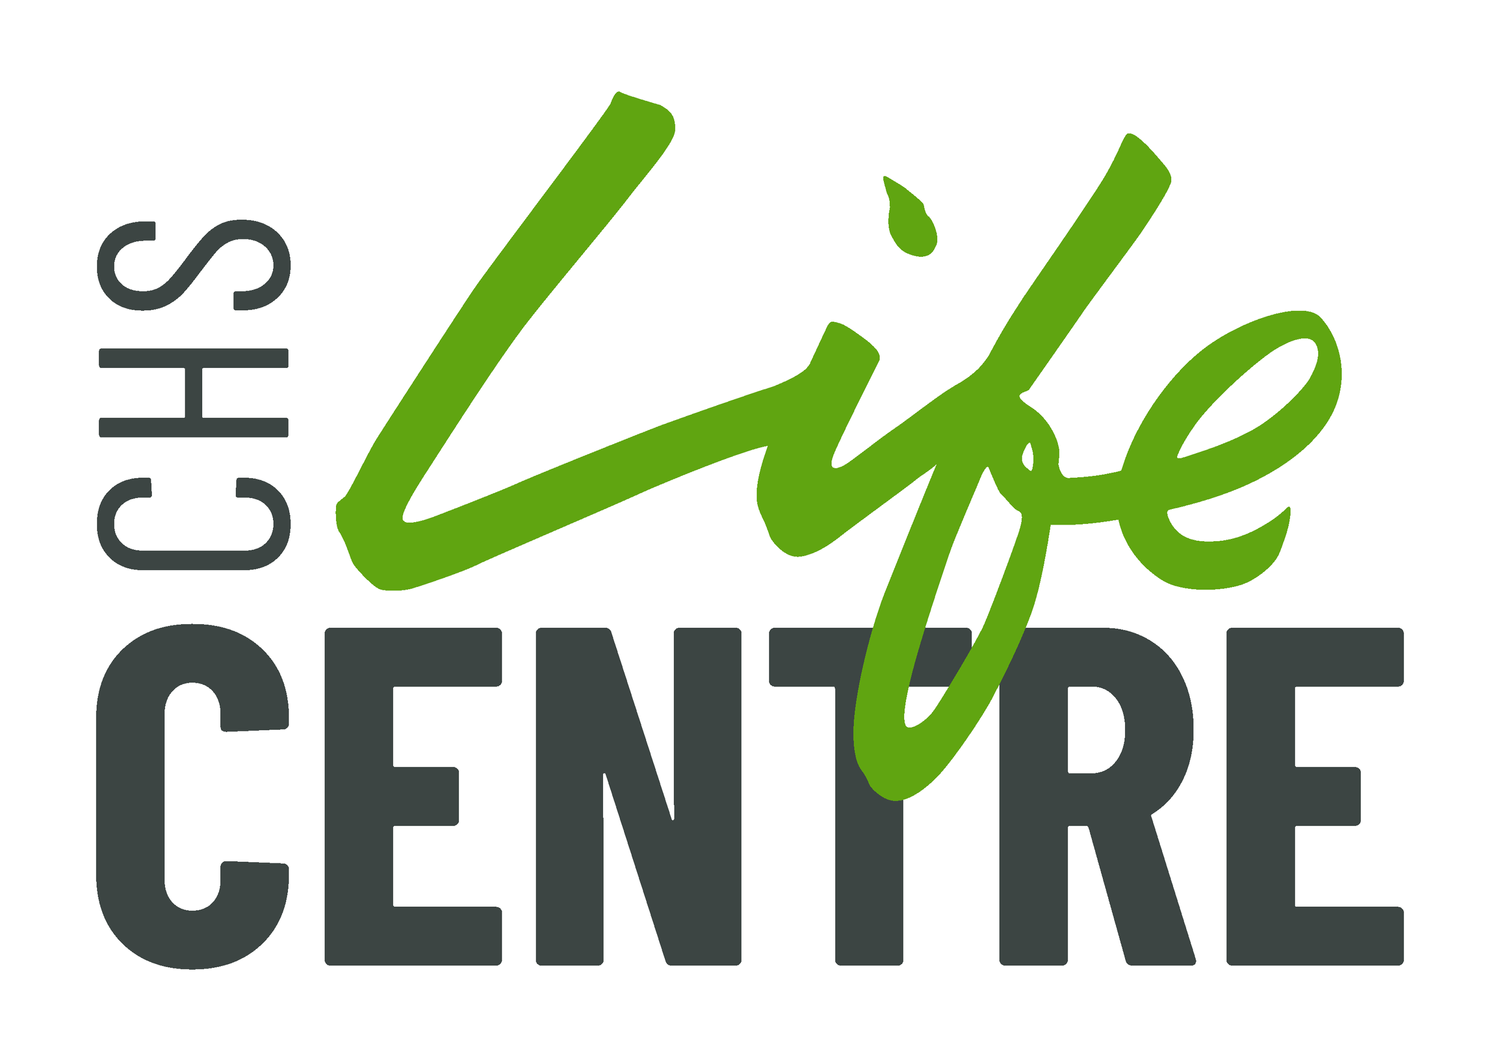 CHS Life Center - Transforming lives, bringing hope